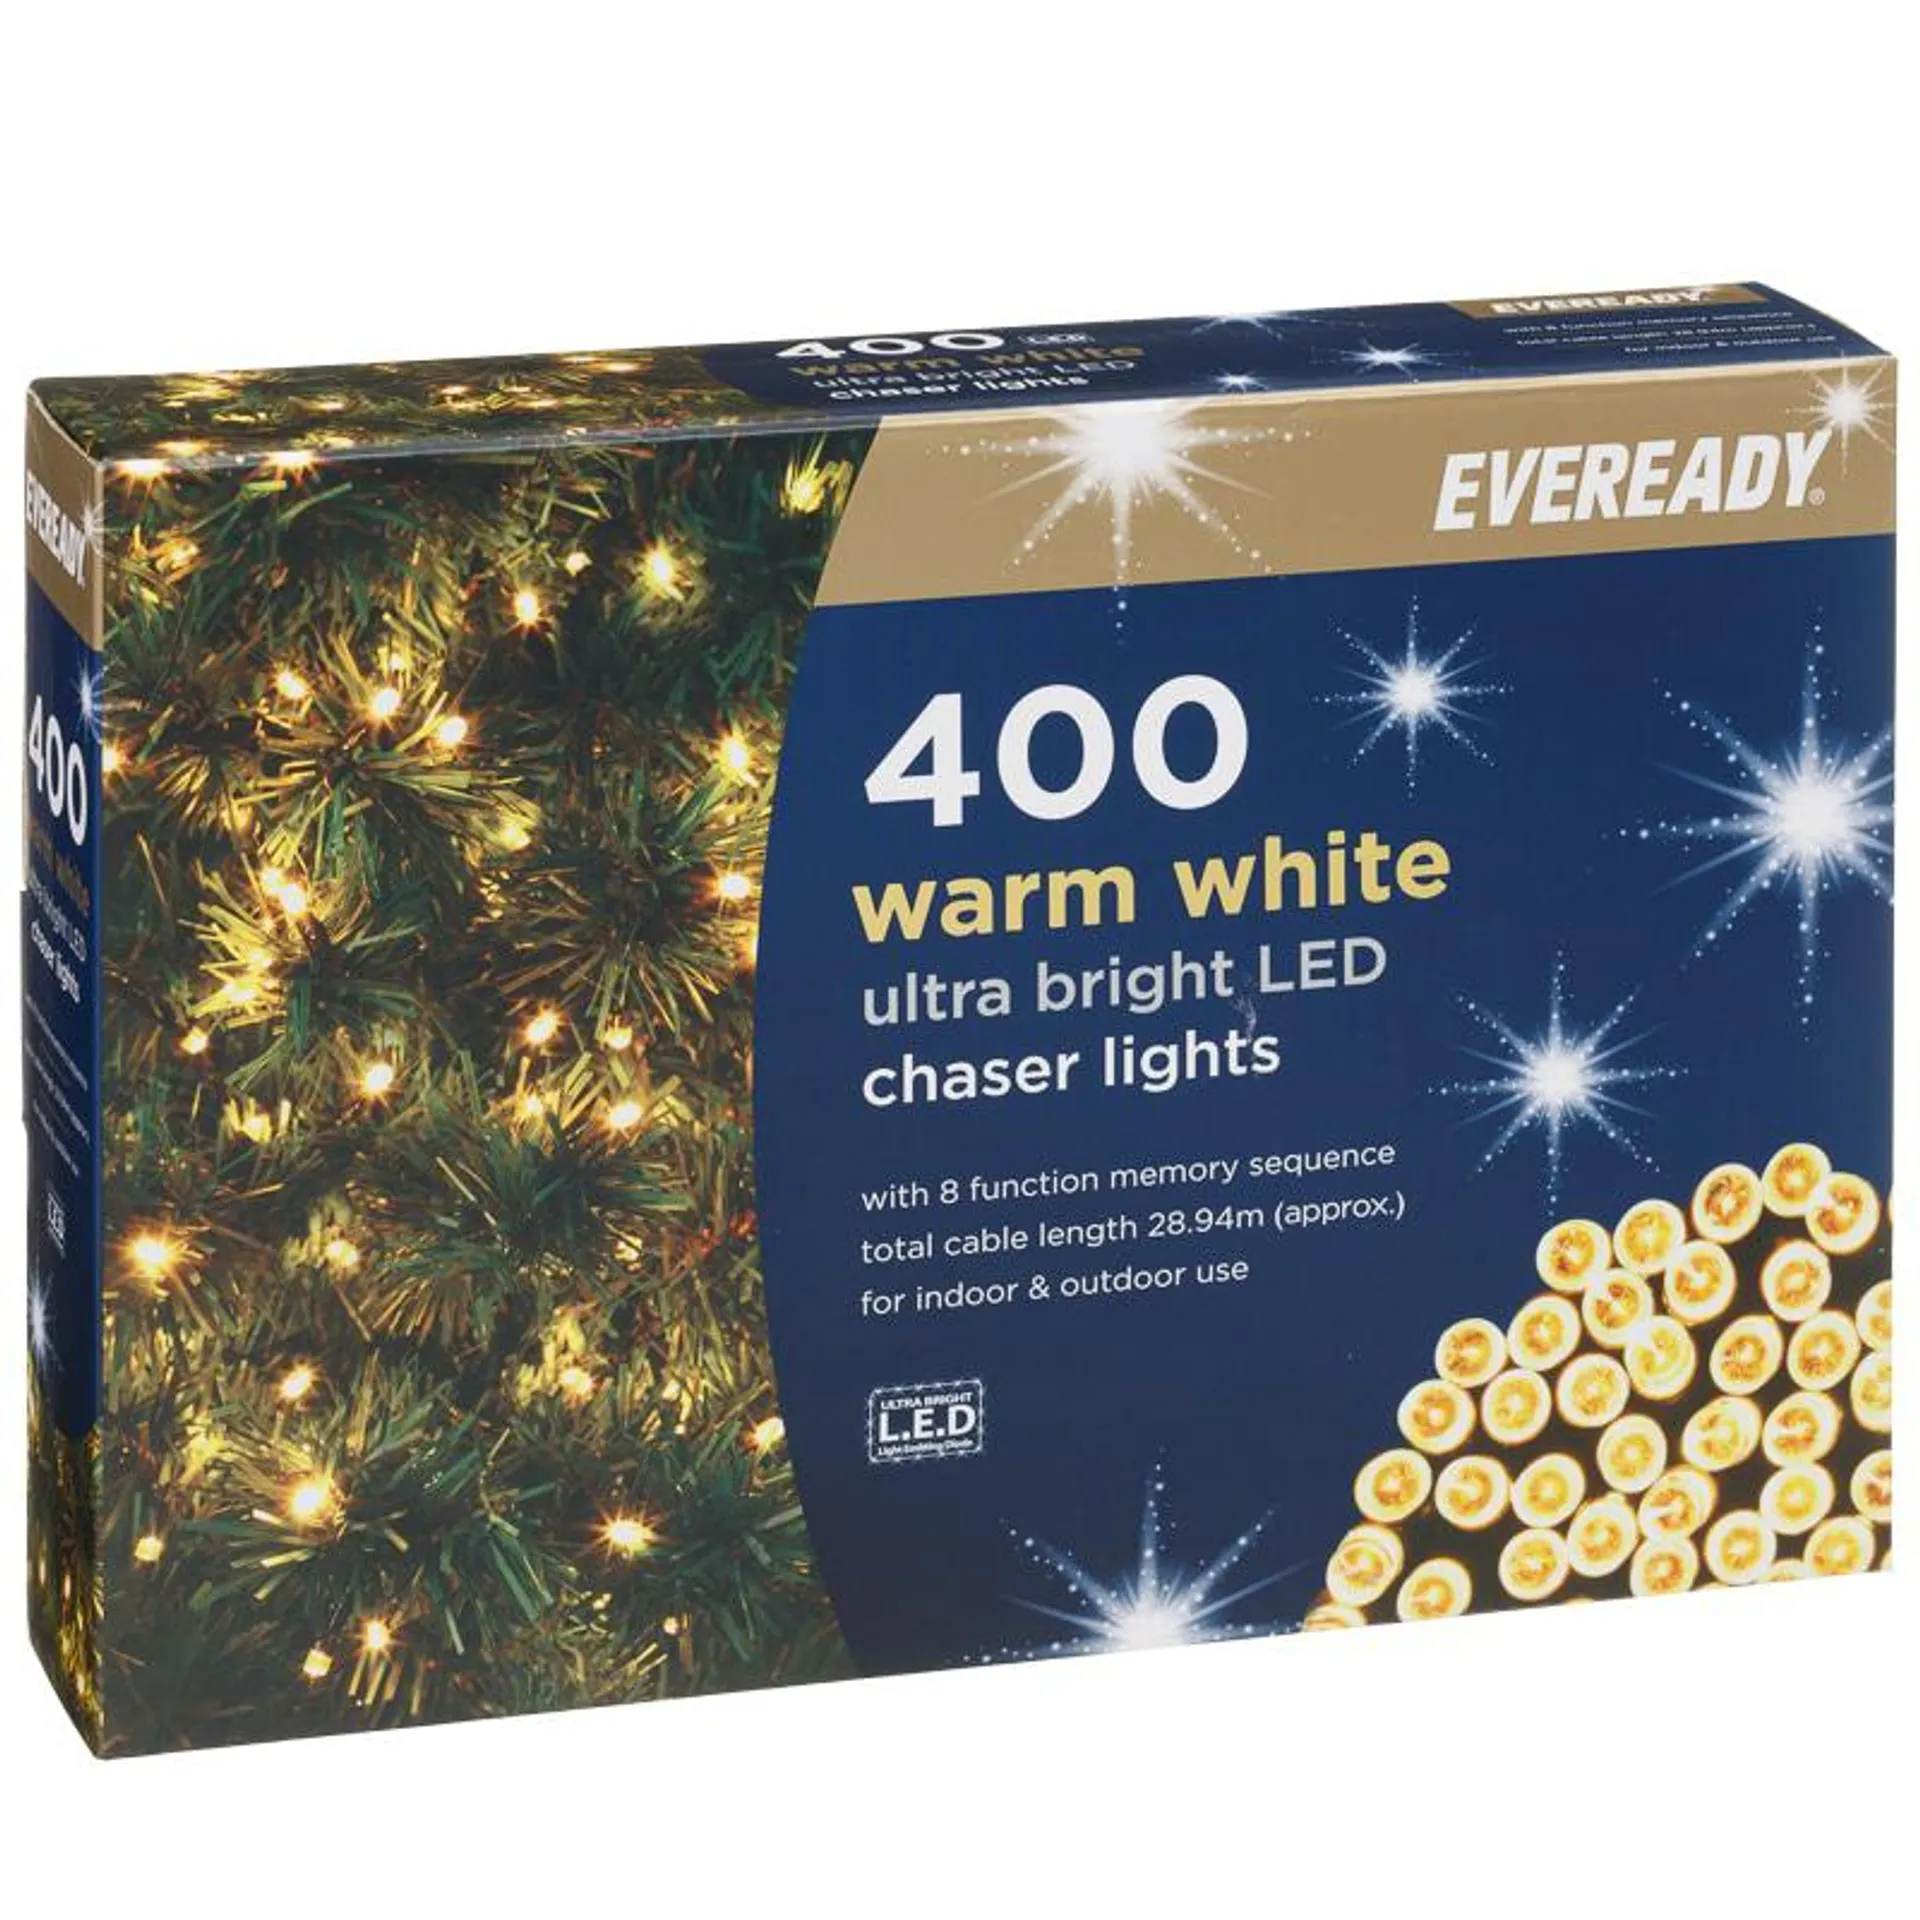 Eveready Ultra Bright LED Chaser Lights 400pk - Warm White